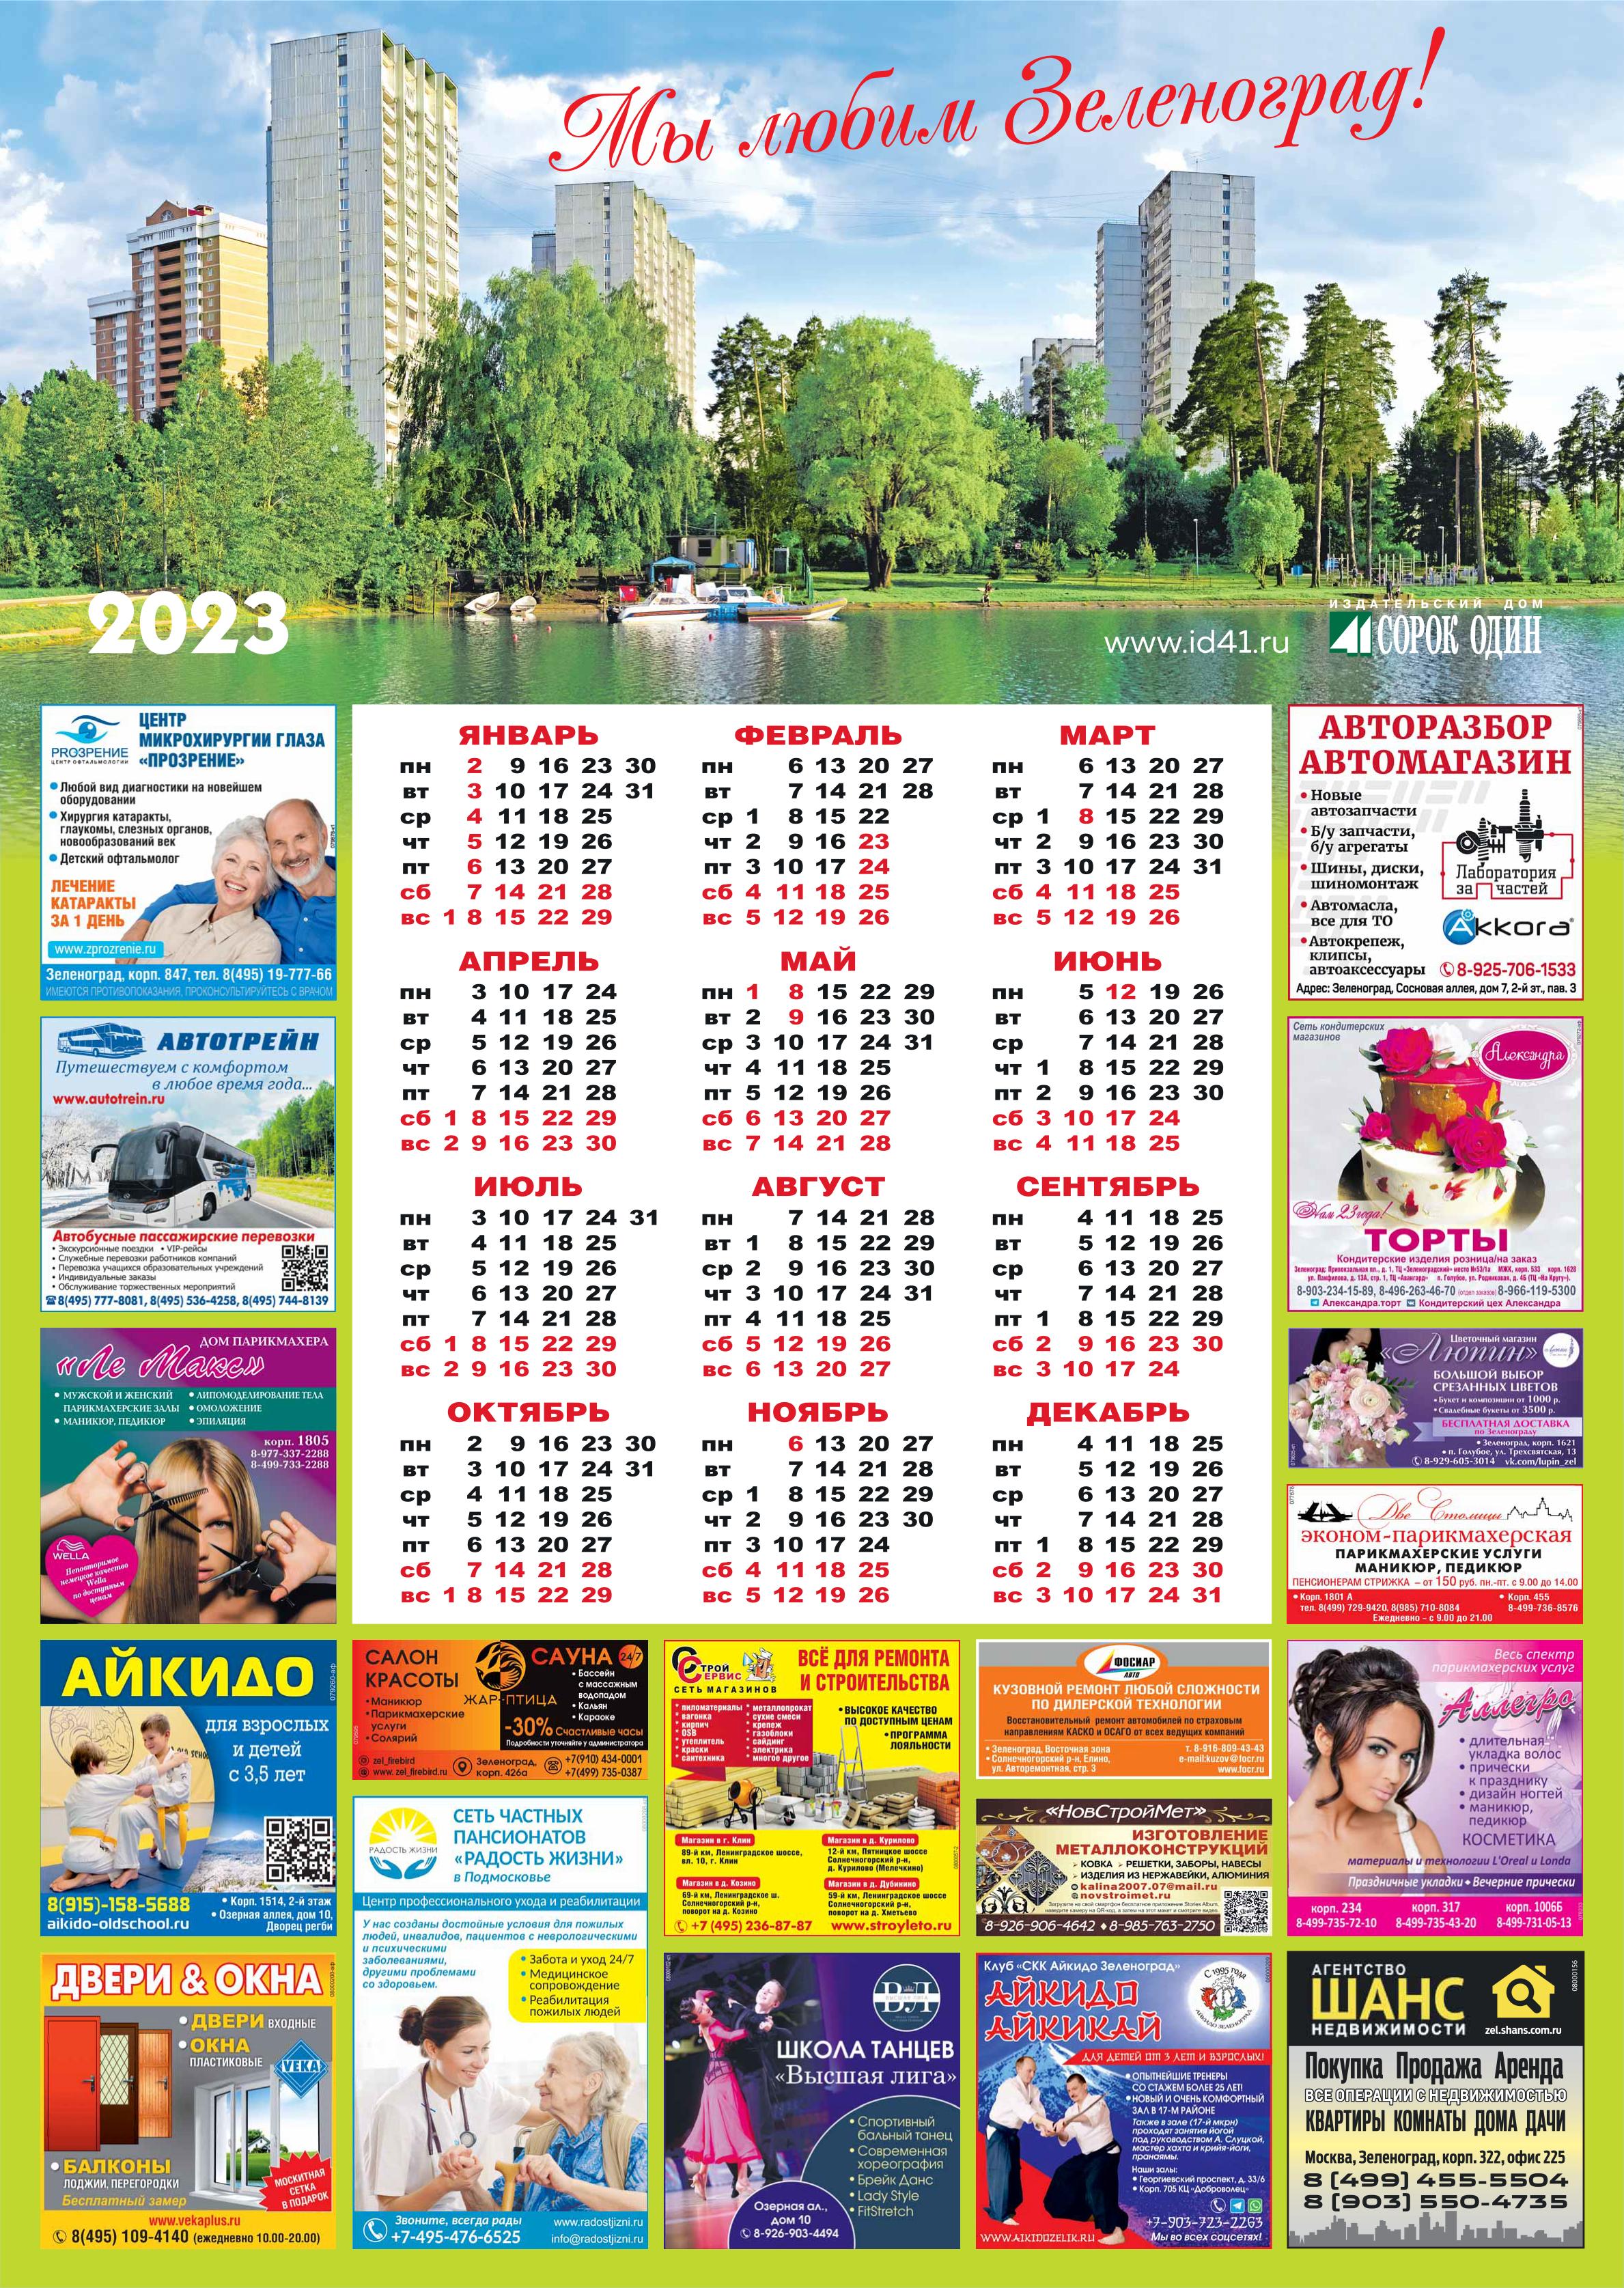 Календарь «Мы любим Зеленоград!» А1 2023